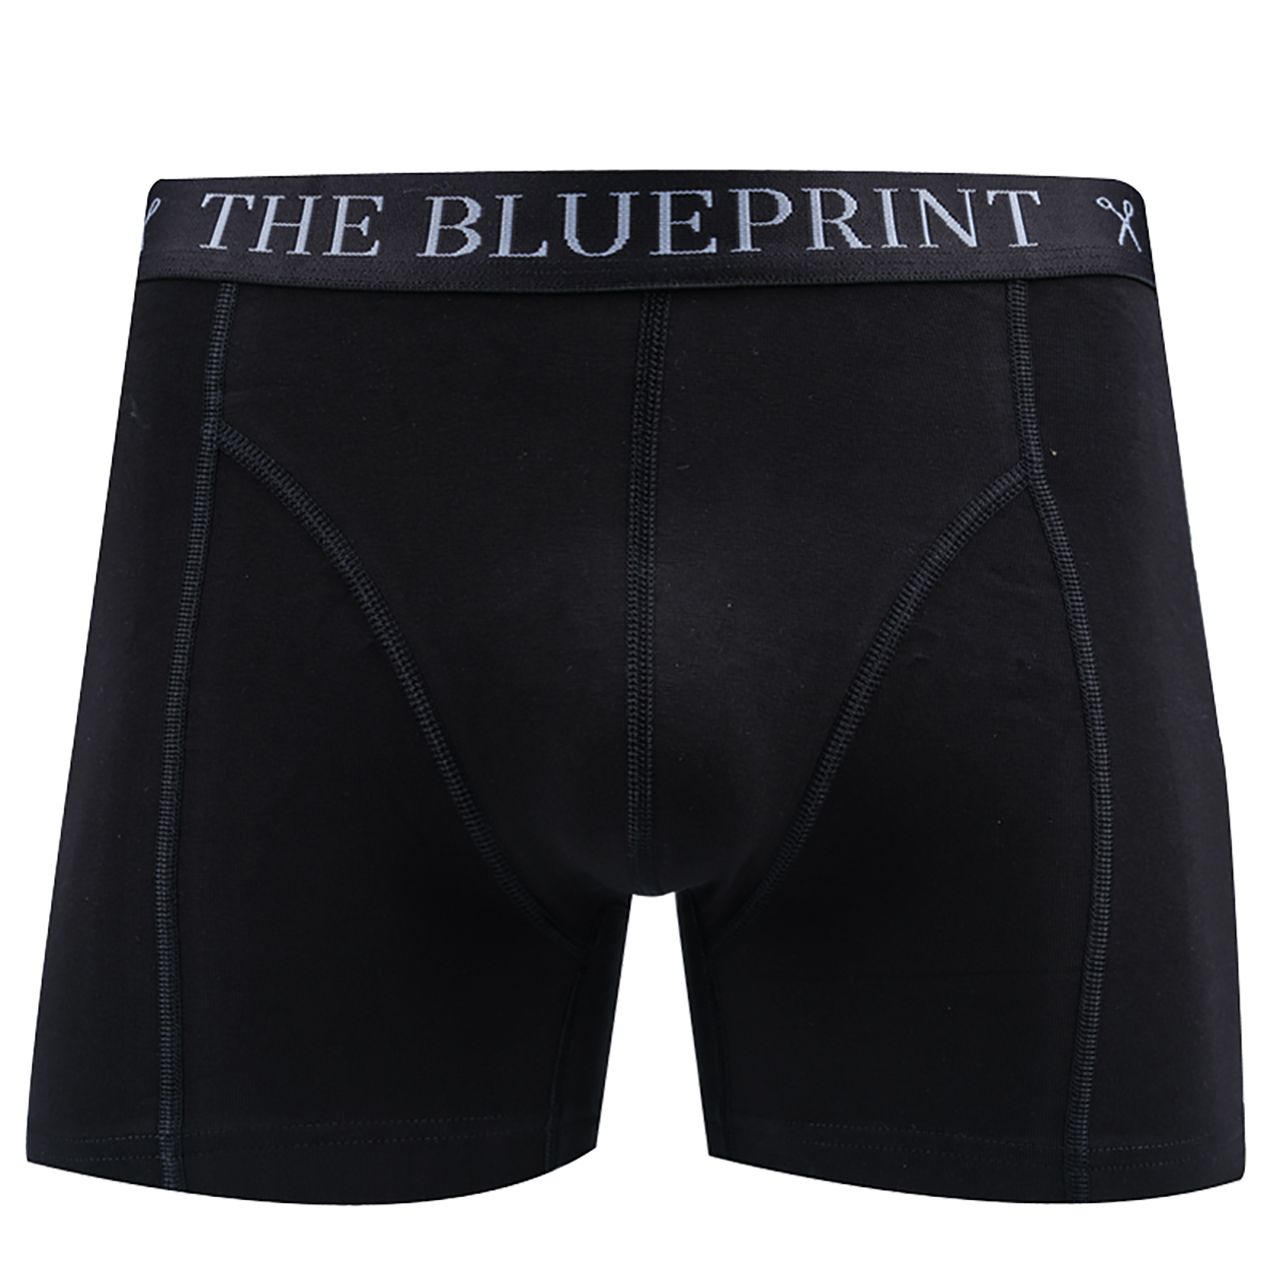 The BLUEPRINT Premium - Boxershort 2-pack Black 086551-001-L